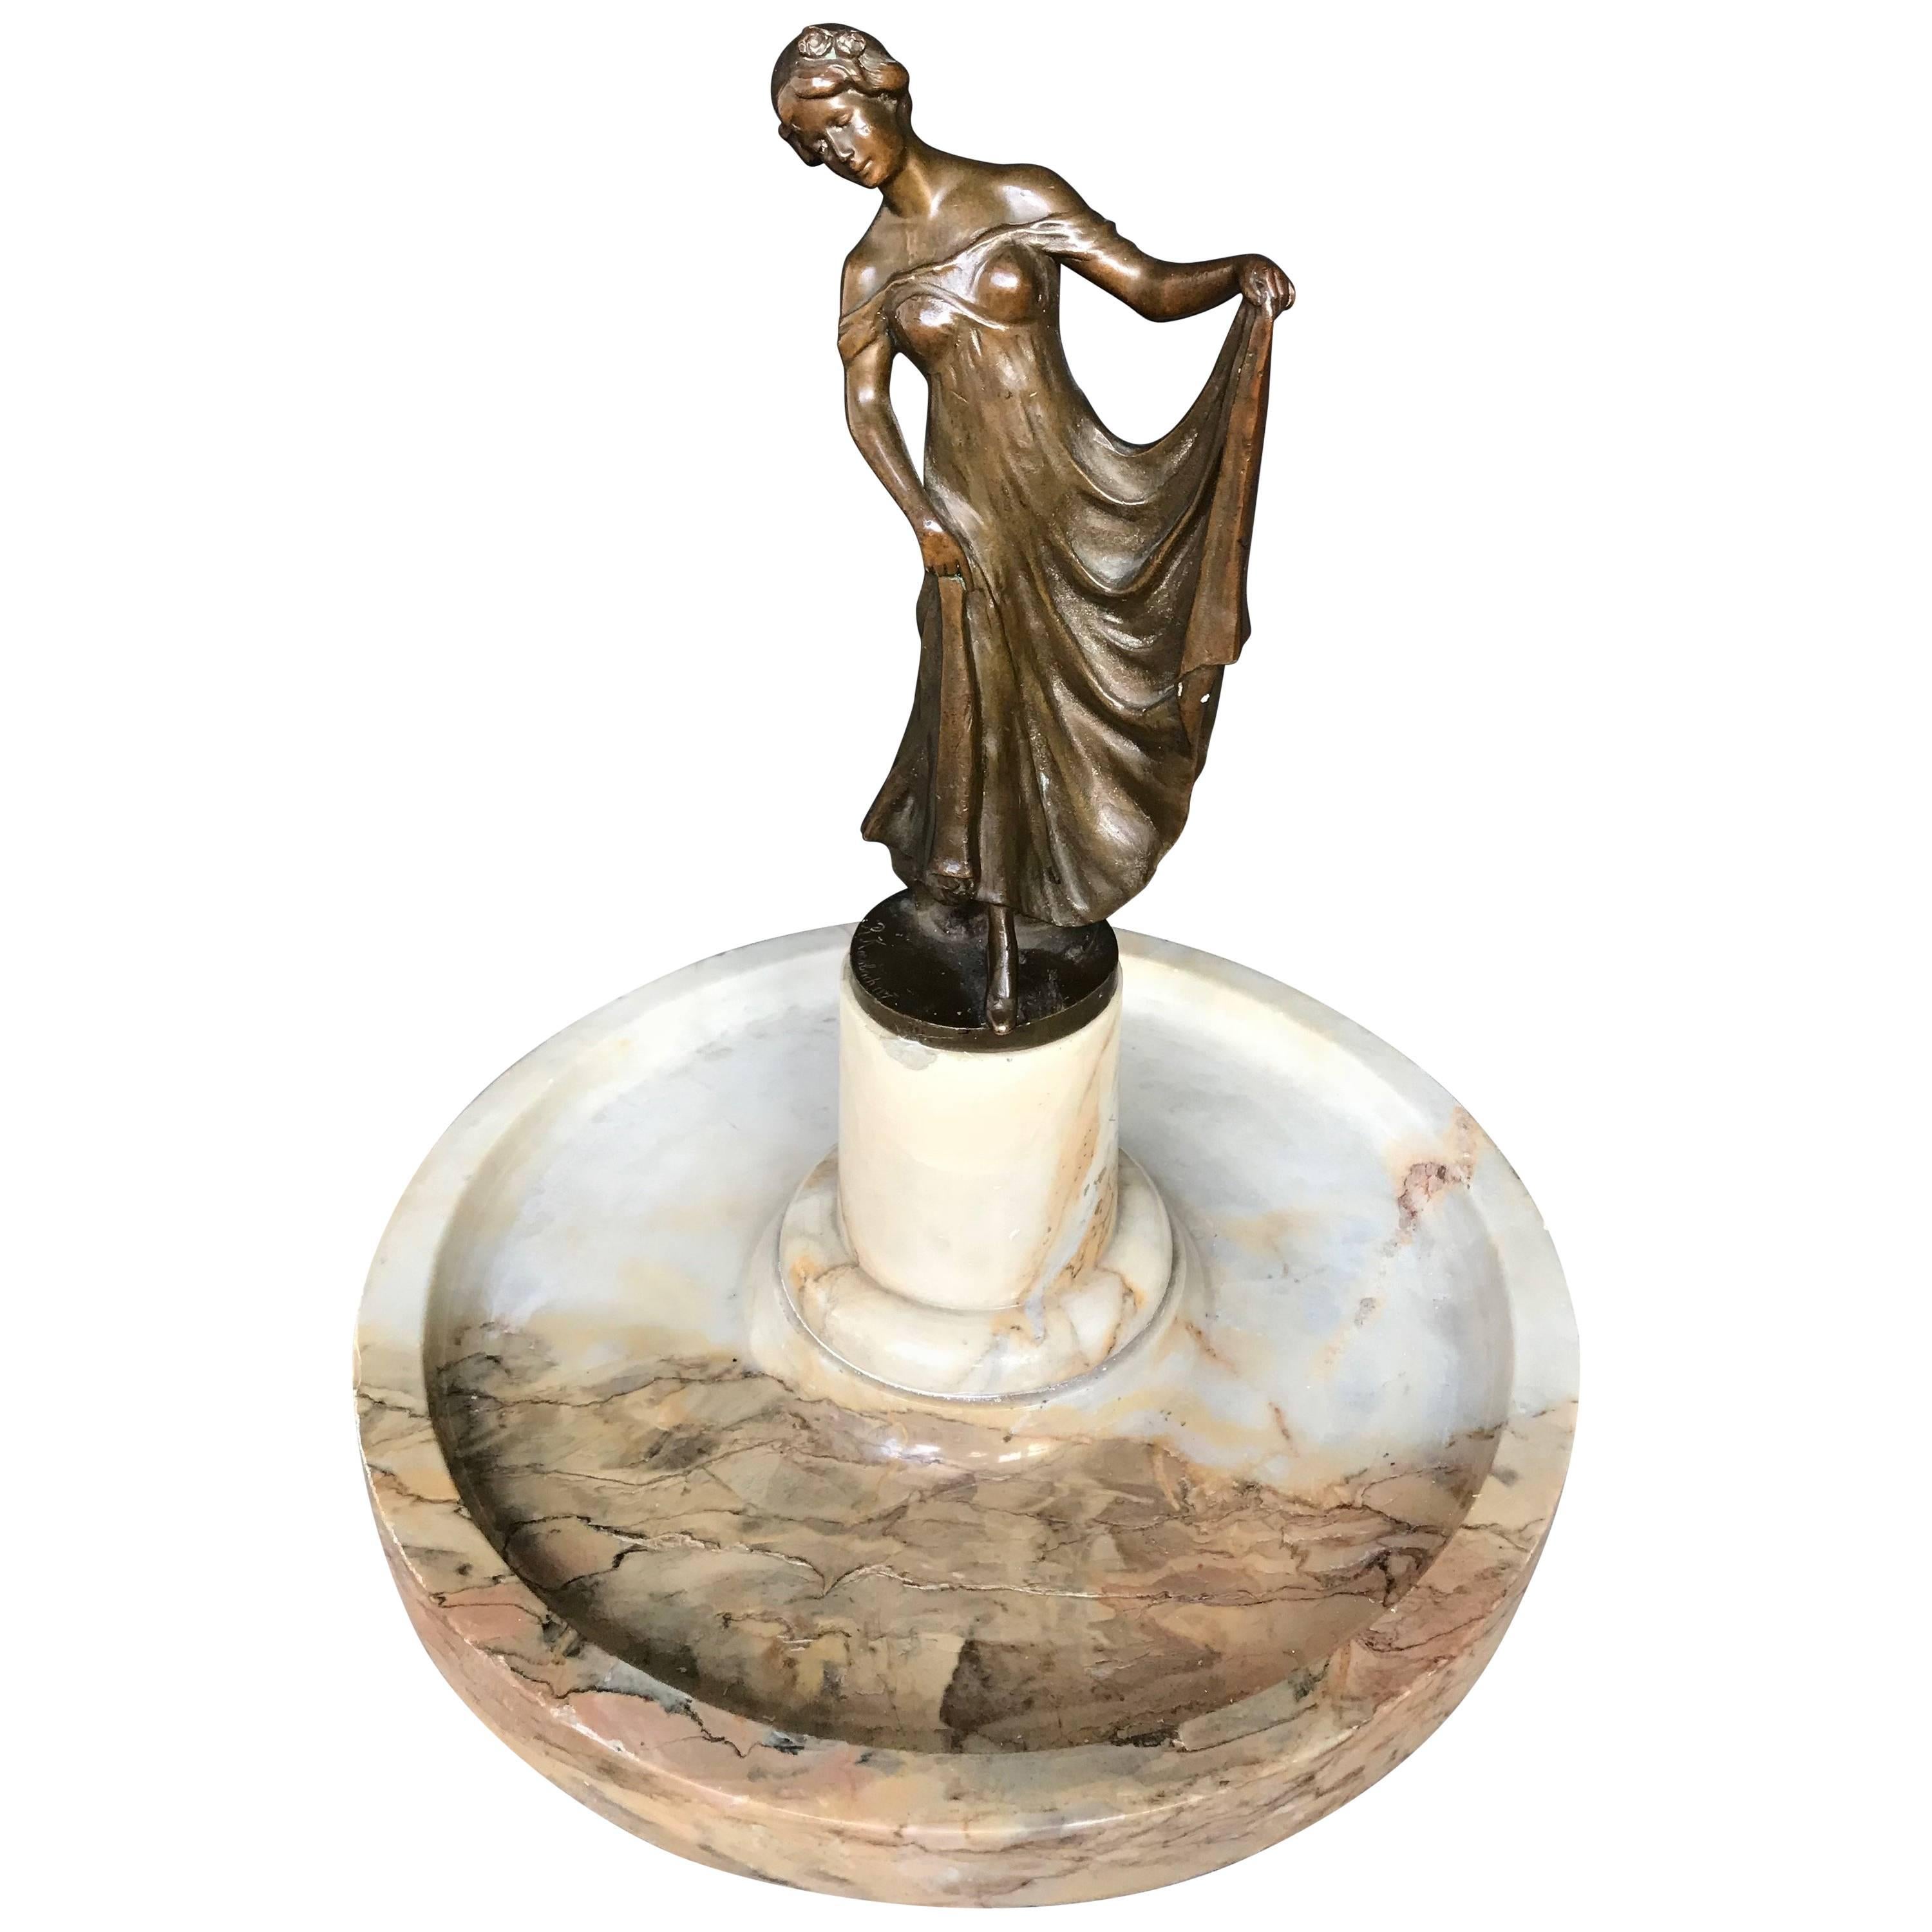 Elegante Jugendstil-Bronze-Damenskulptur auf Marmortablettsockel aus dem frühen 20. Jahrhundert